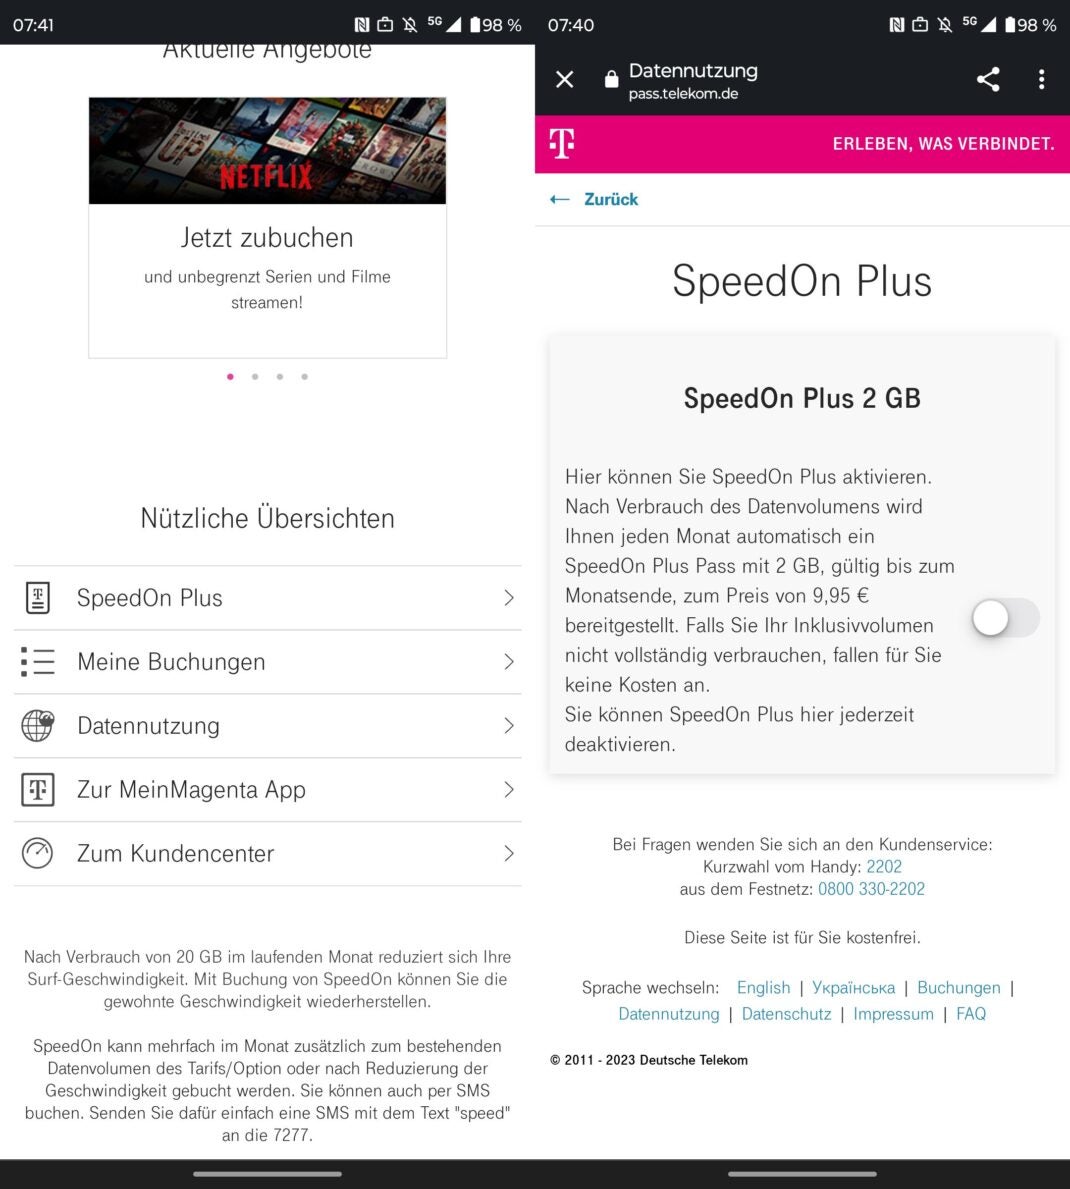 SpeedOn Plus - die Datenautomatik der Telekom